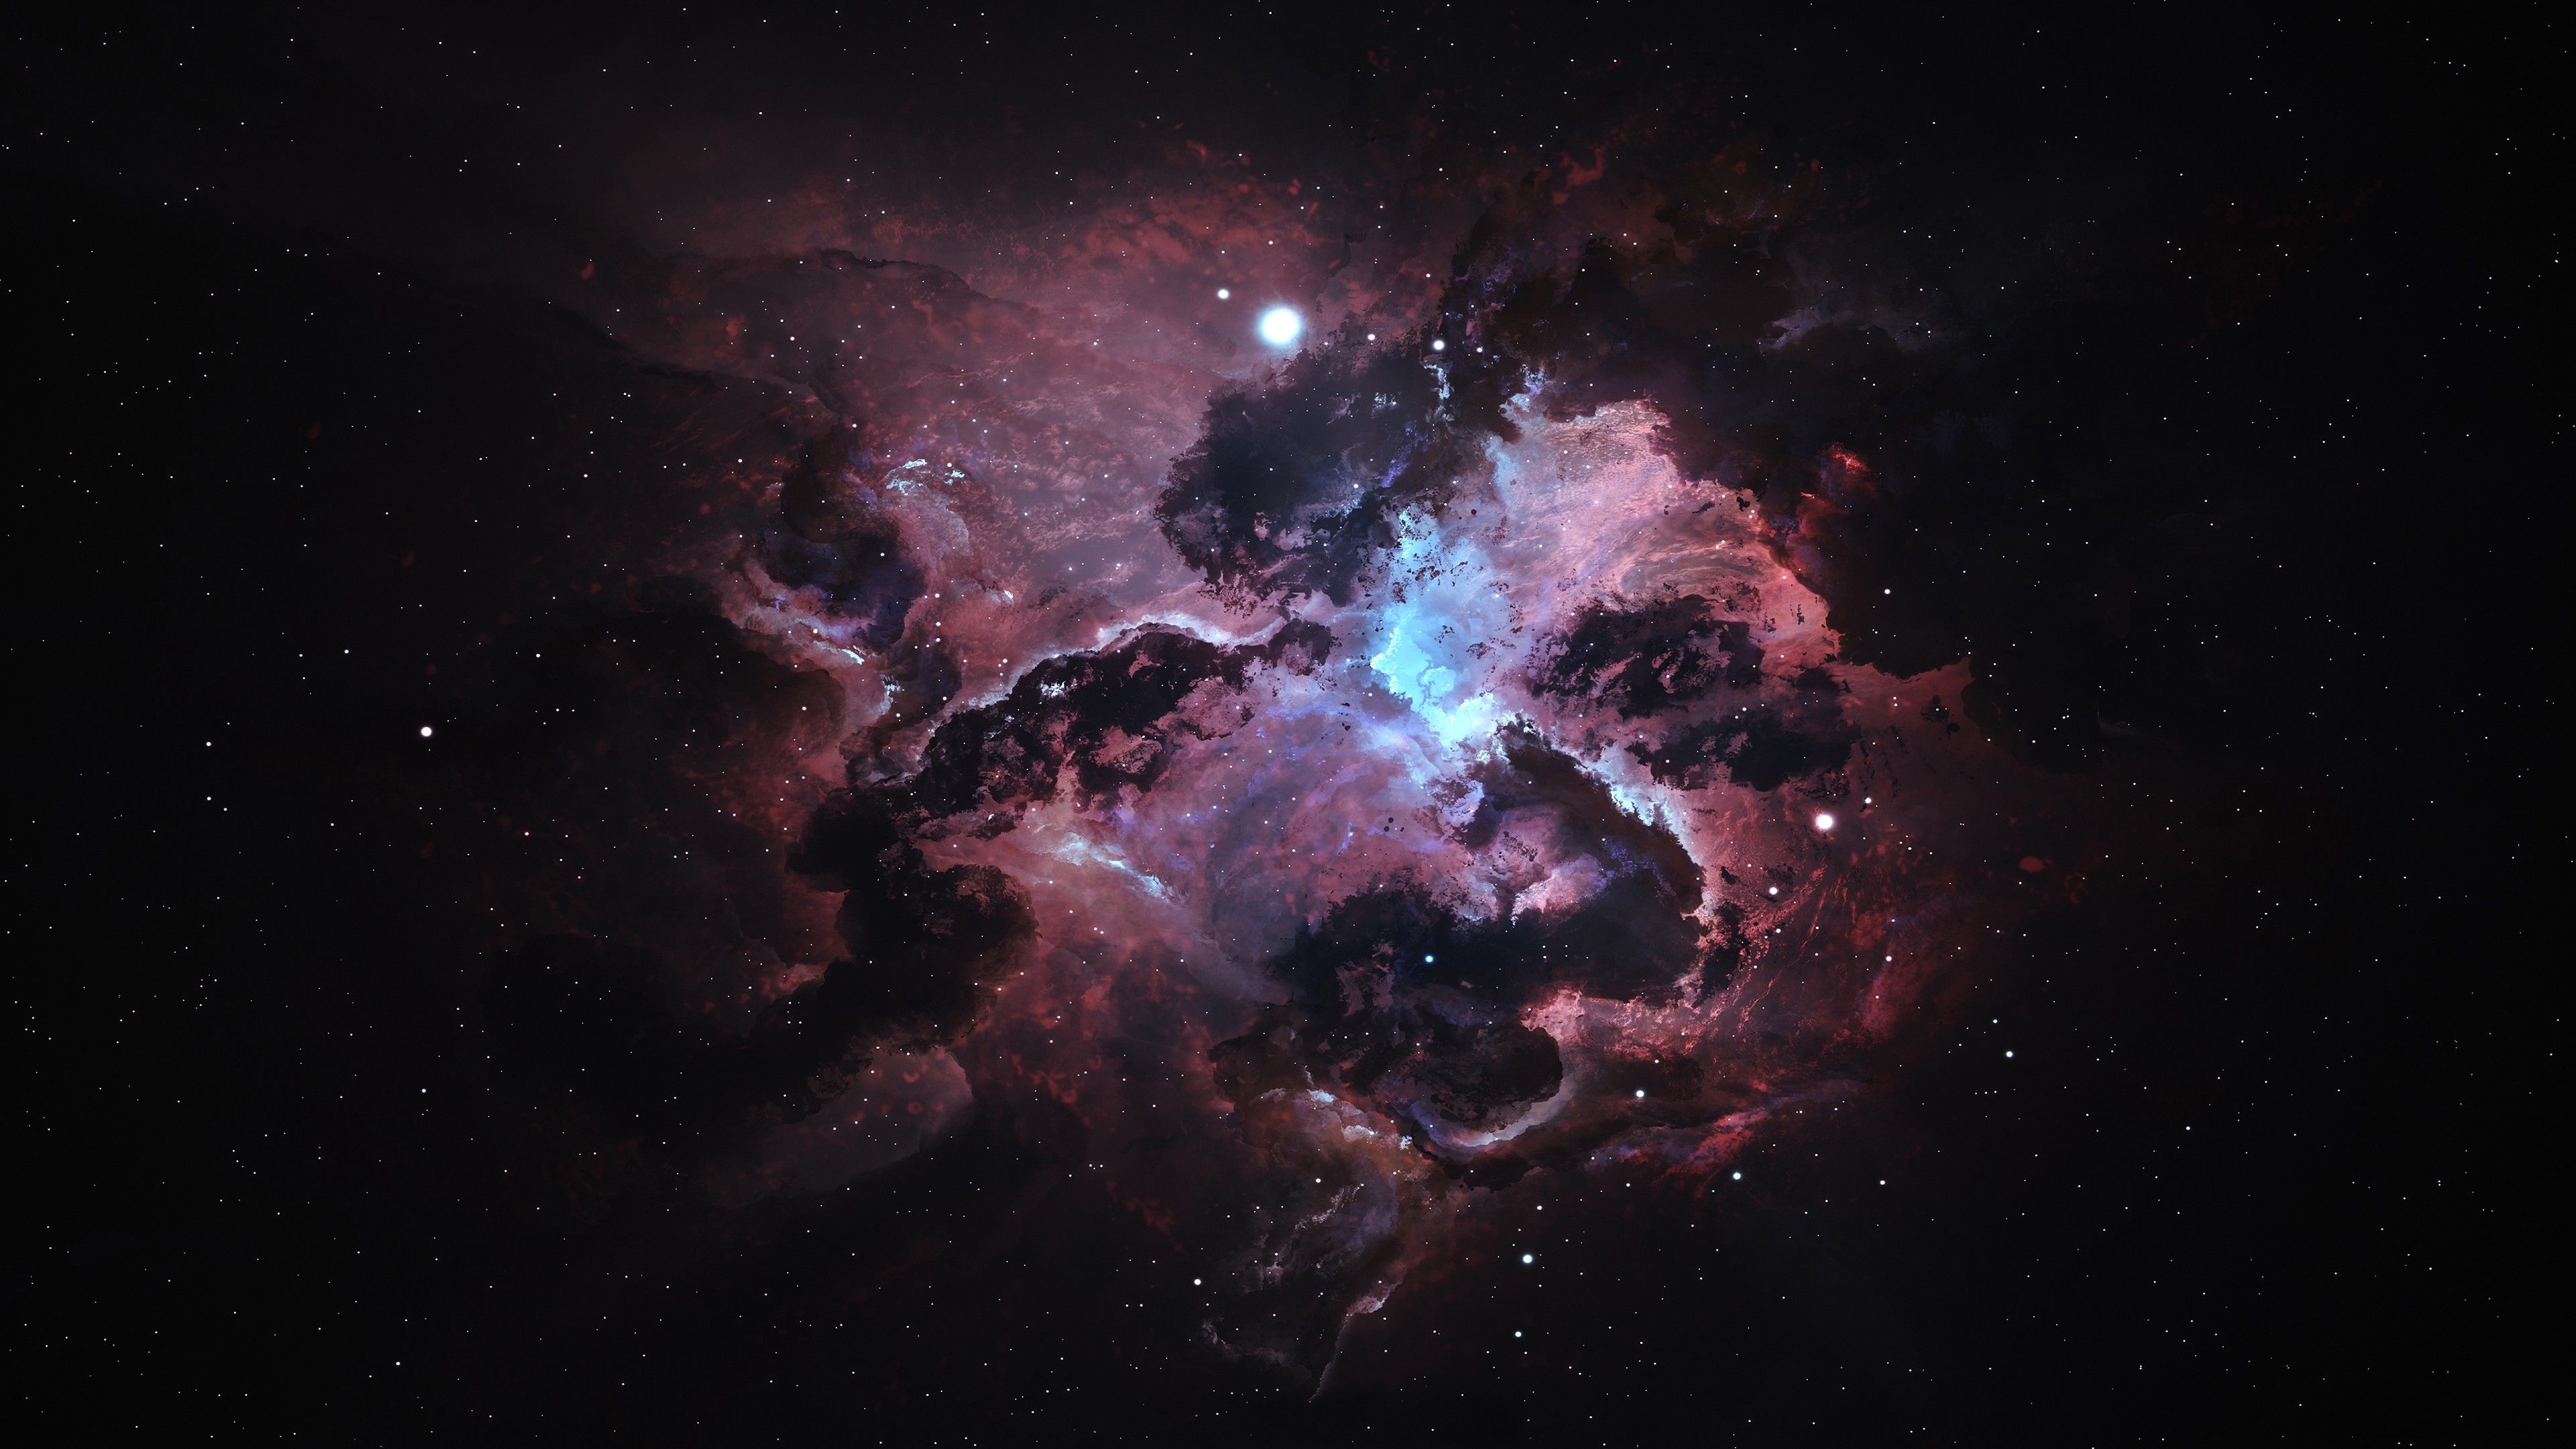 Space Galaxy Digital Wallpapers